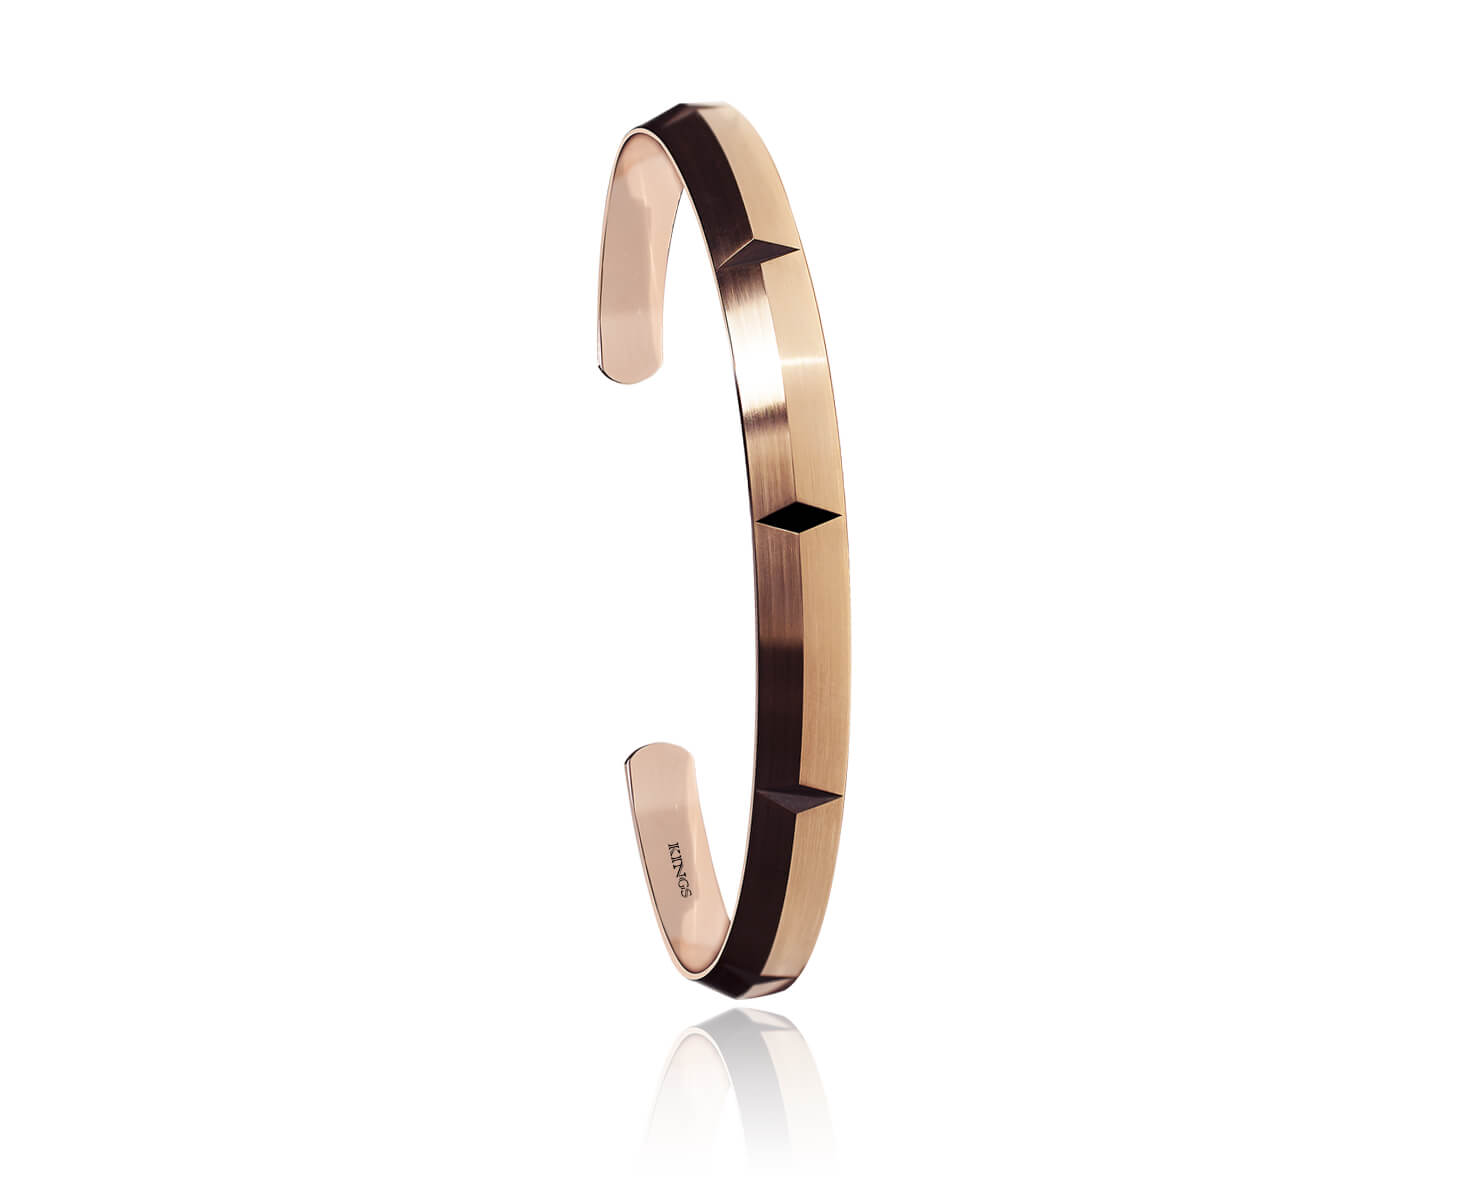 Designer Jewelry For Men matte finish rose gold cuff bracelet with black ruthenium coating logo of kings